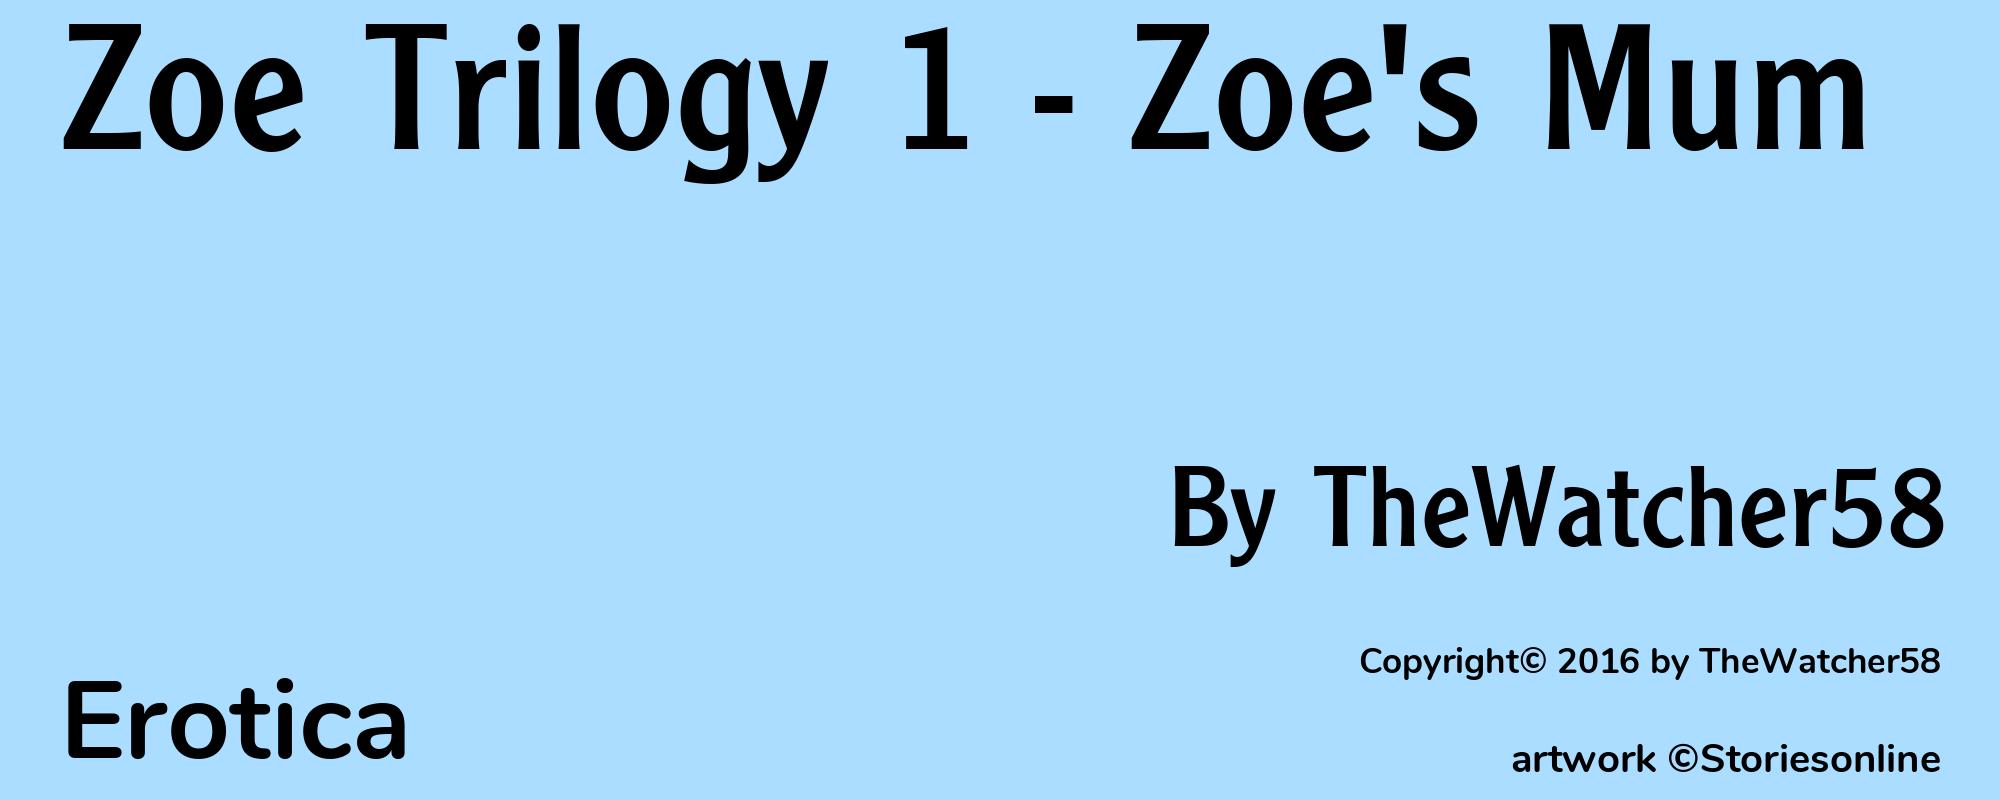 Zoe Trilogy 1 - Zoe's Mum - Cover